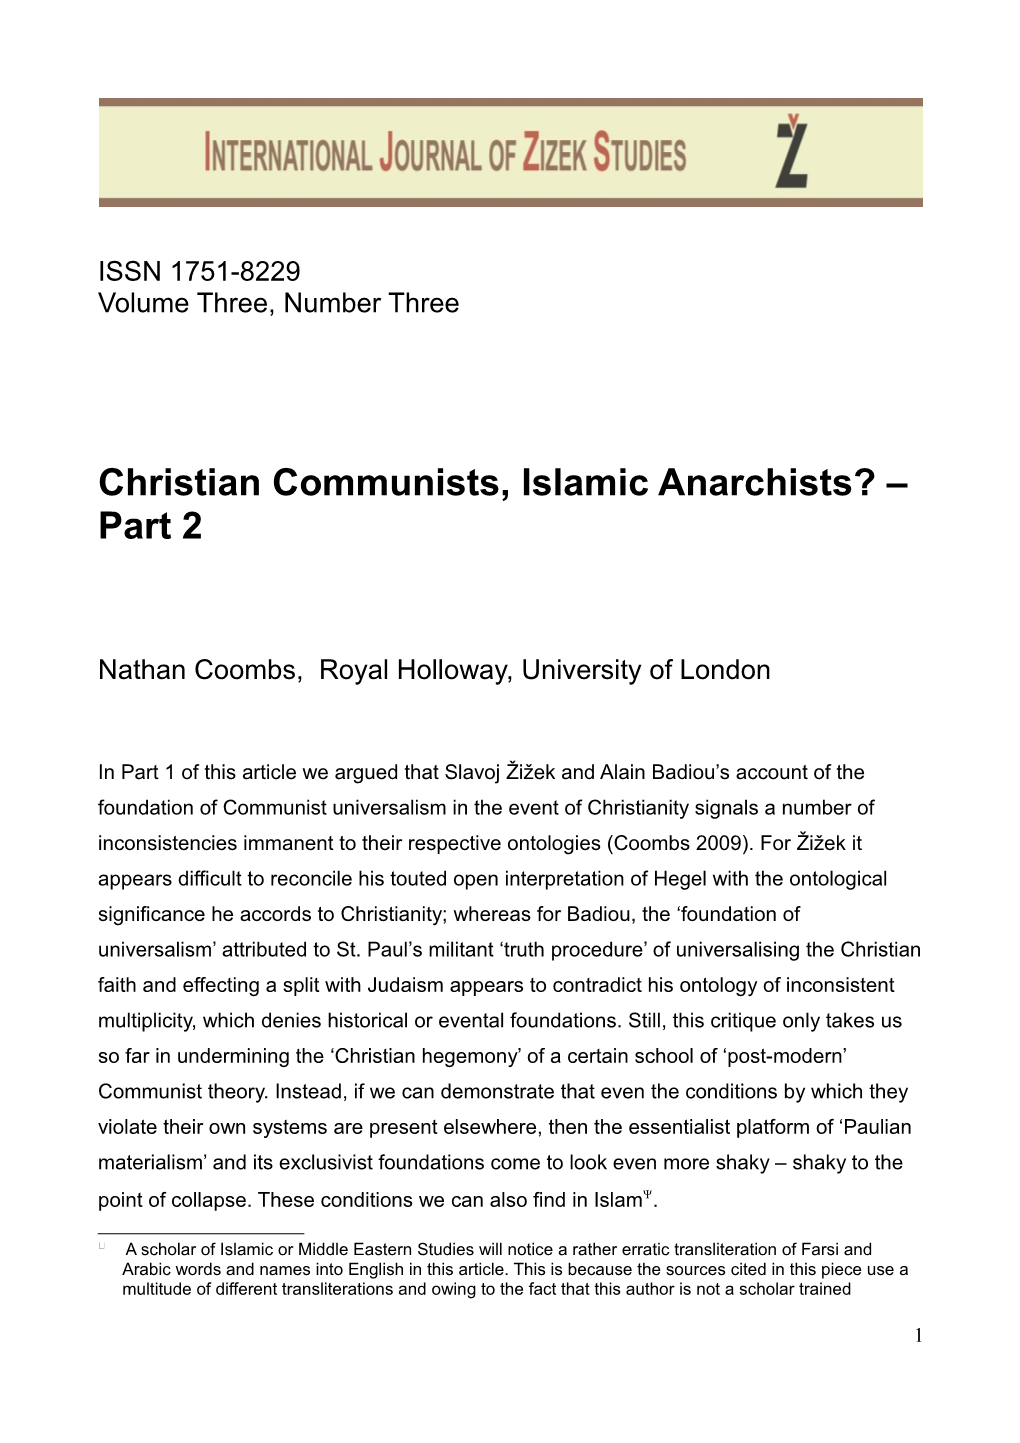 Christian Communists, Islamic Anarchists? – Part 2